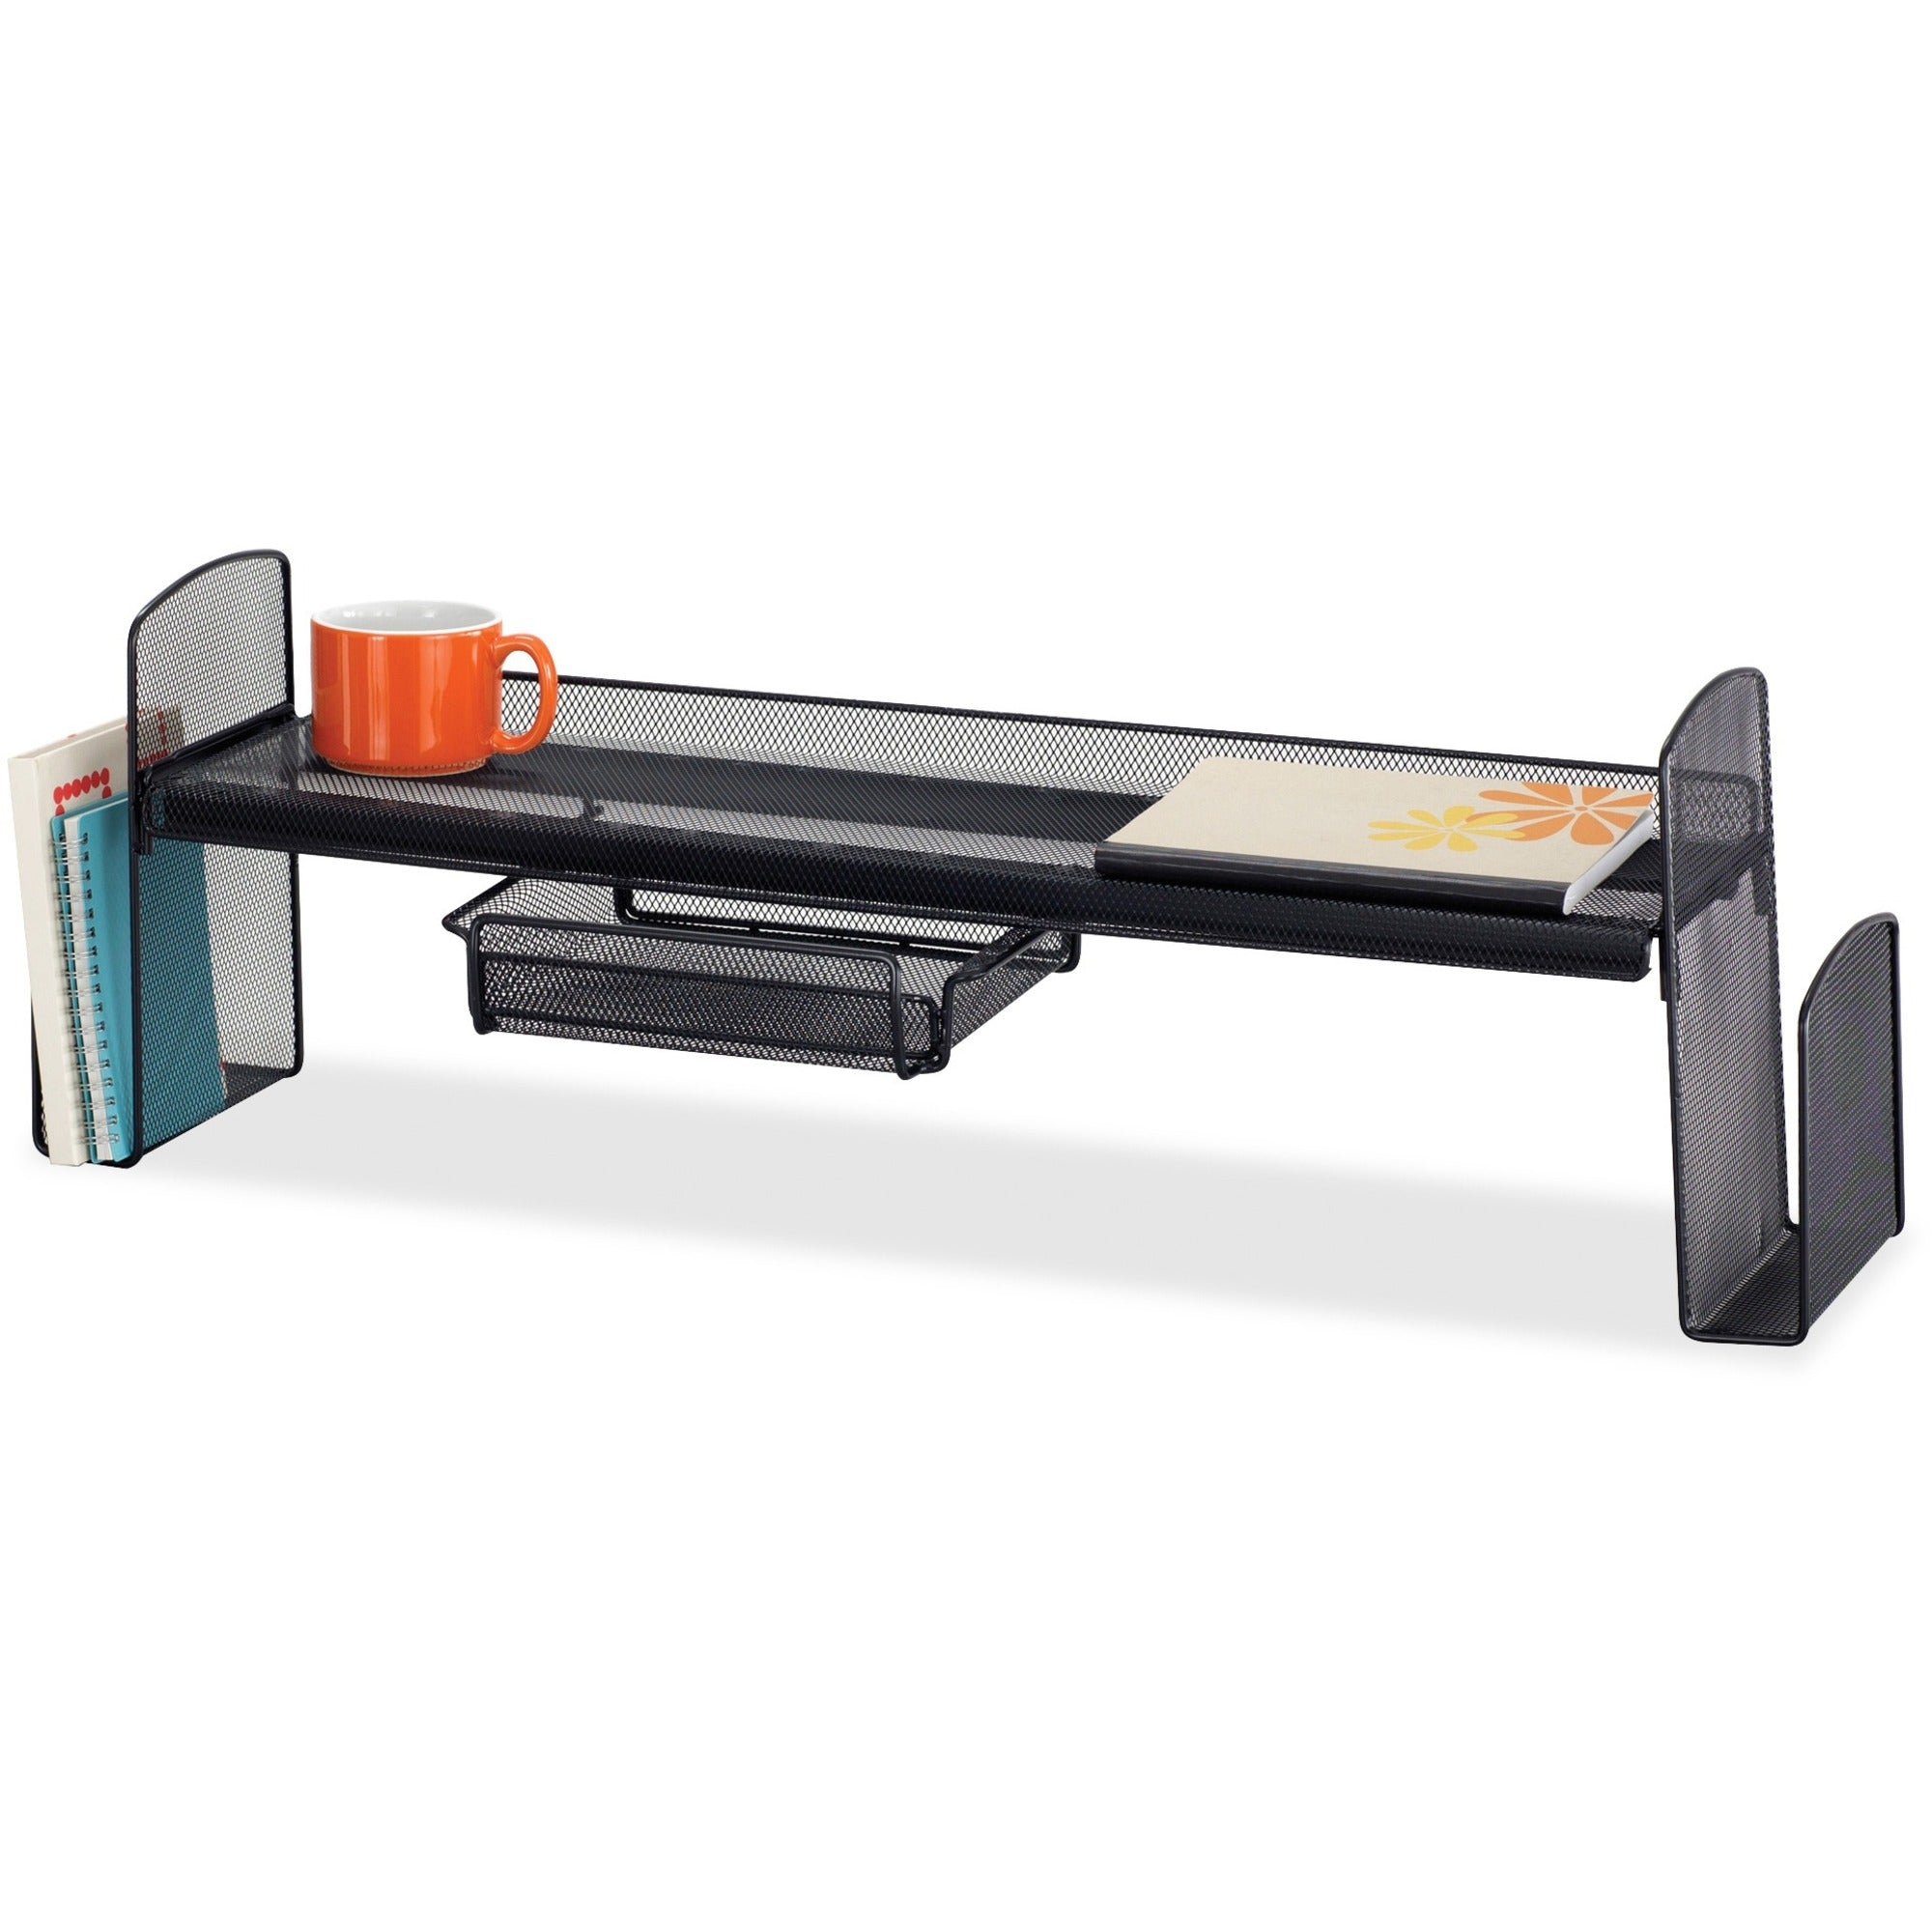 Safco Onyx Steel Mesh Off-Surface Shelf - 10" Height x 31.5" Width x 7.3" DepthDesktop - Black - 1 Each - 